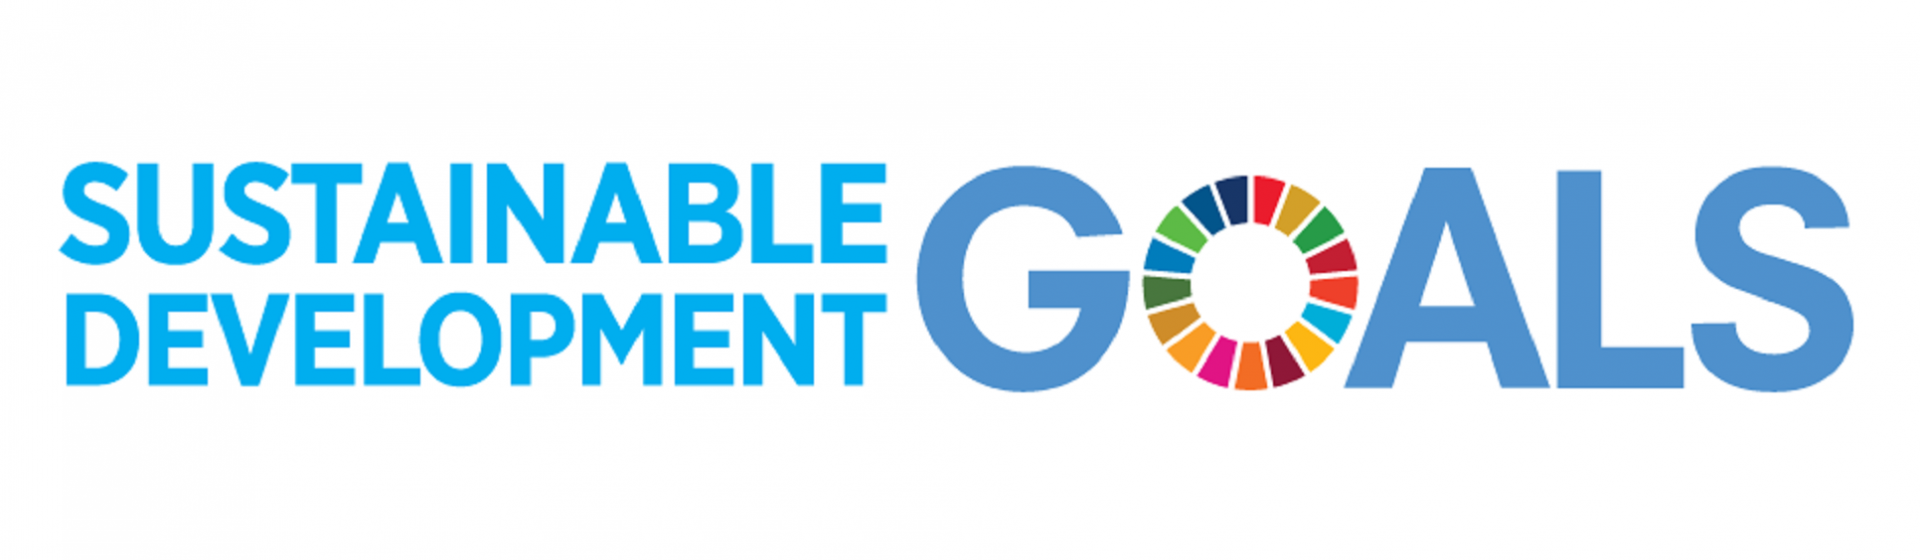 SDGs - UNDP NRO